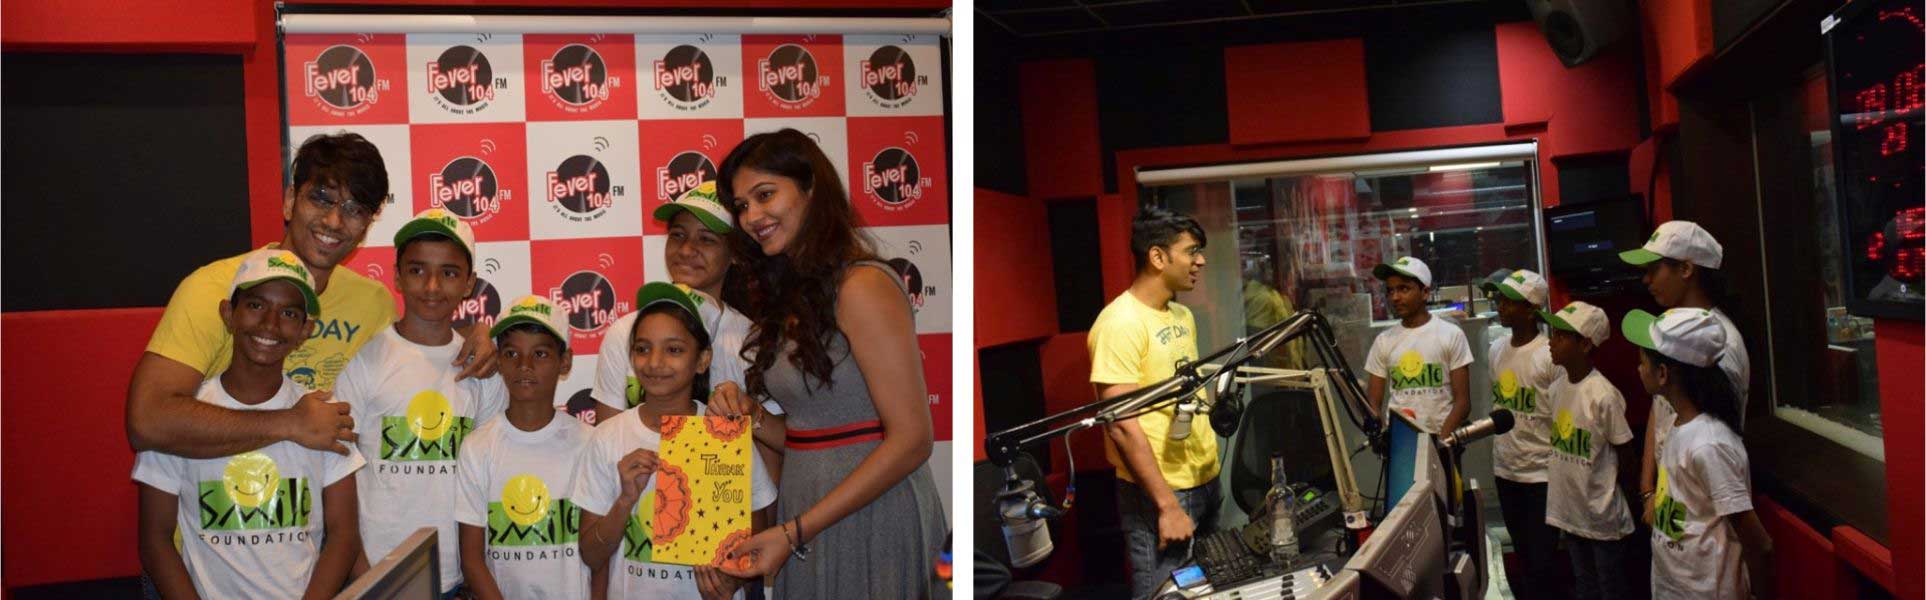 Smile celebrates Anti Child Labor Day with Fever FM Radio Station